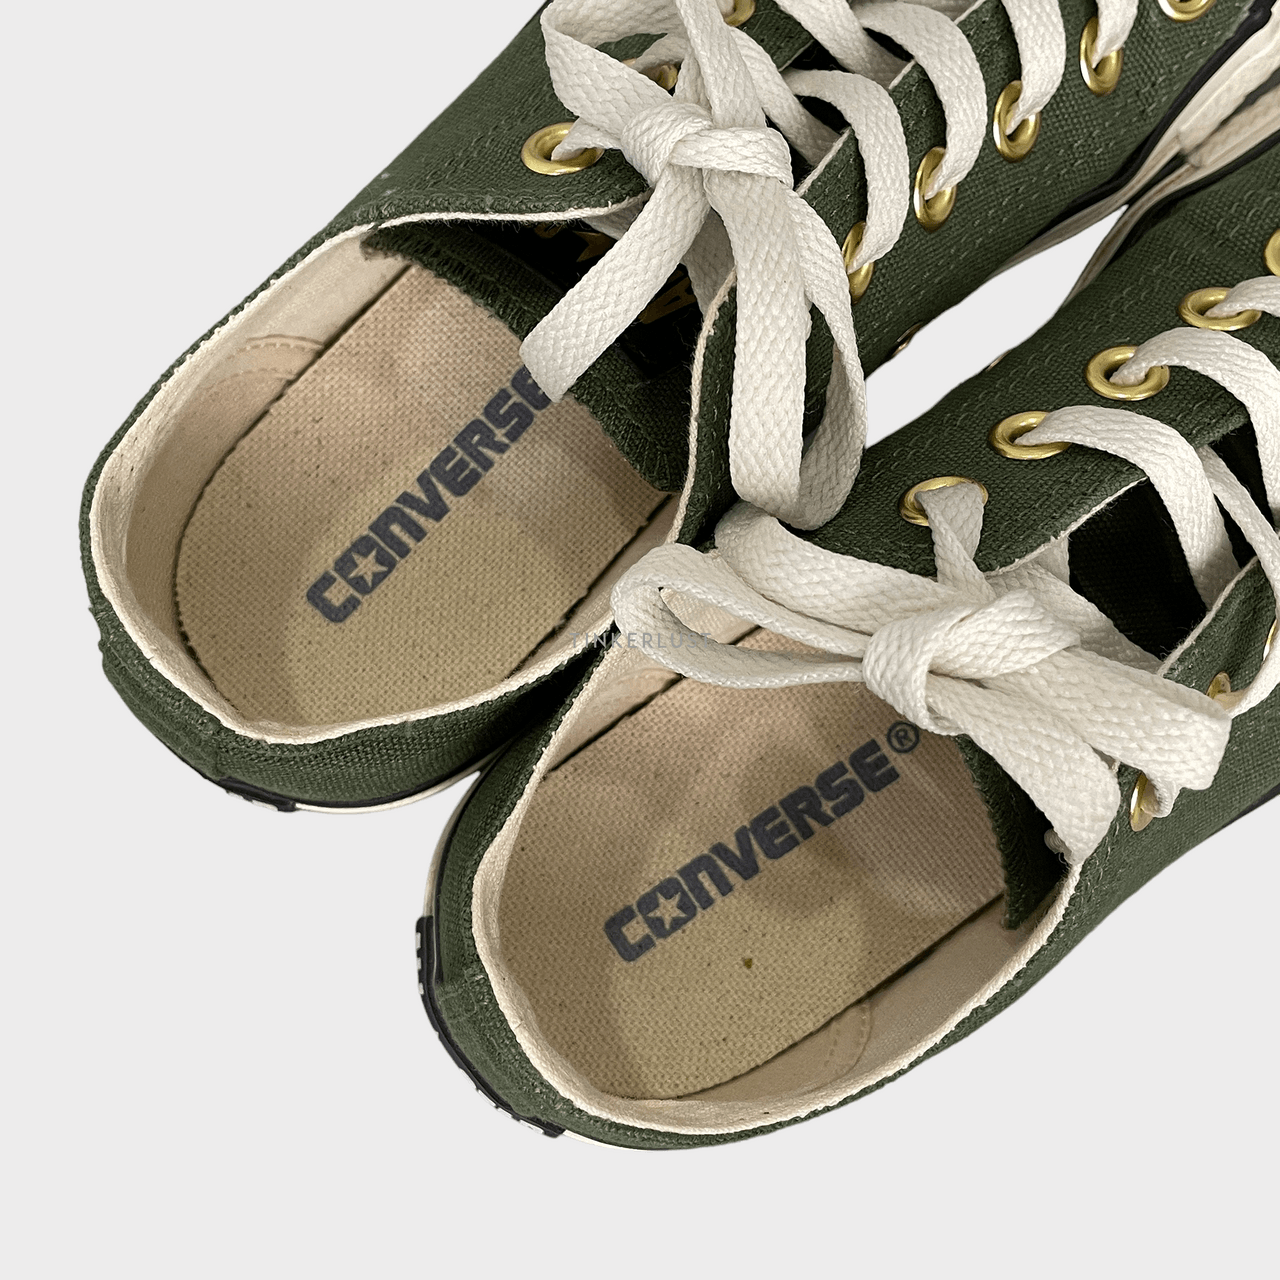 Converse Khaki Green Sneakers